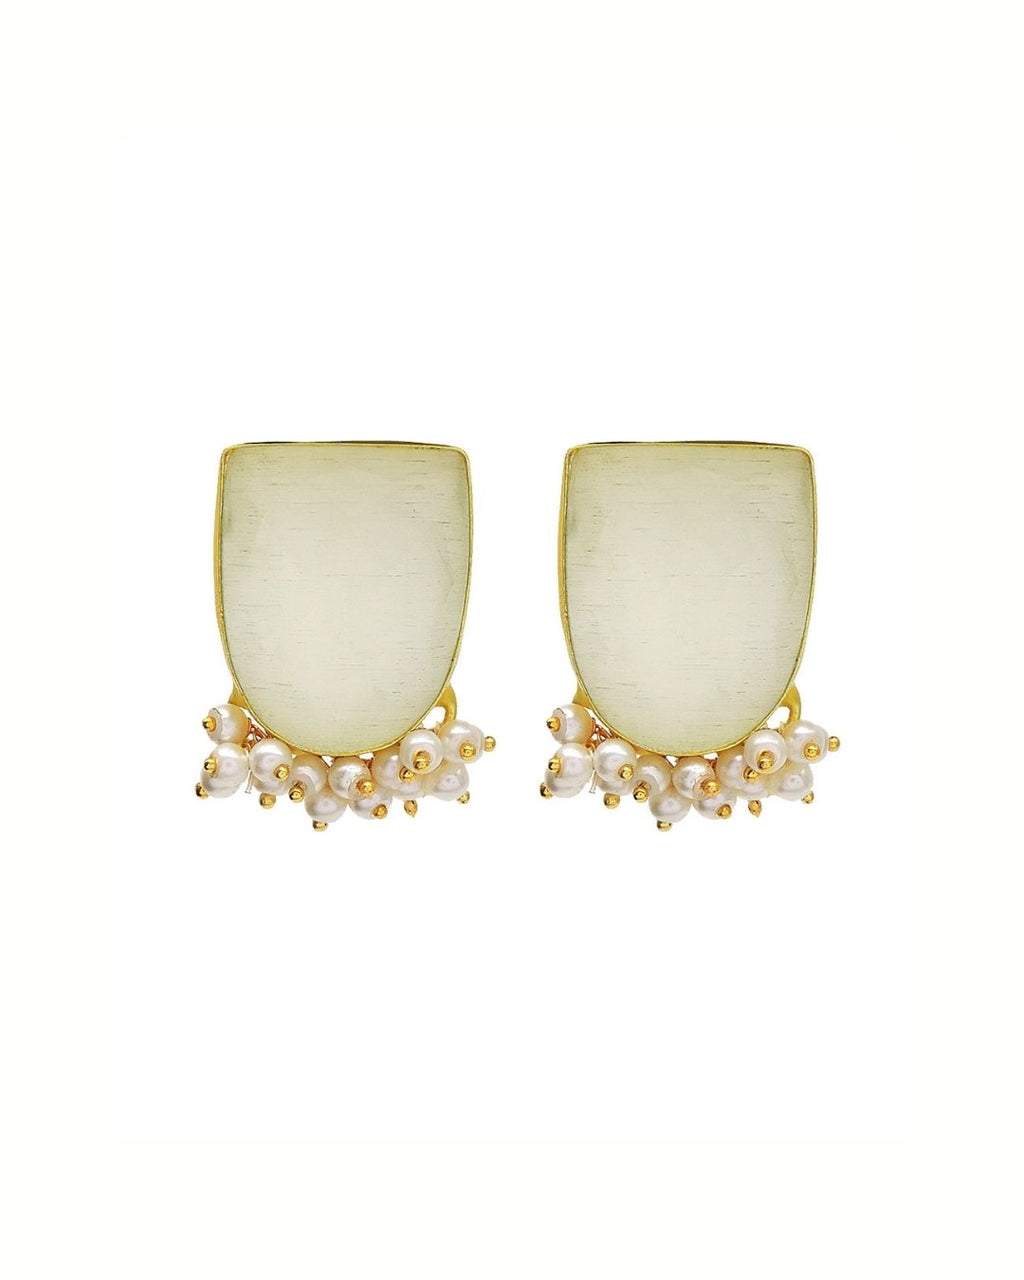 Samara Earrings - Earrings - Handcrafted Jewellery - Made in India - Dubai Jewellery, Fashion & Lifestyle - Dori